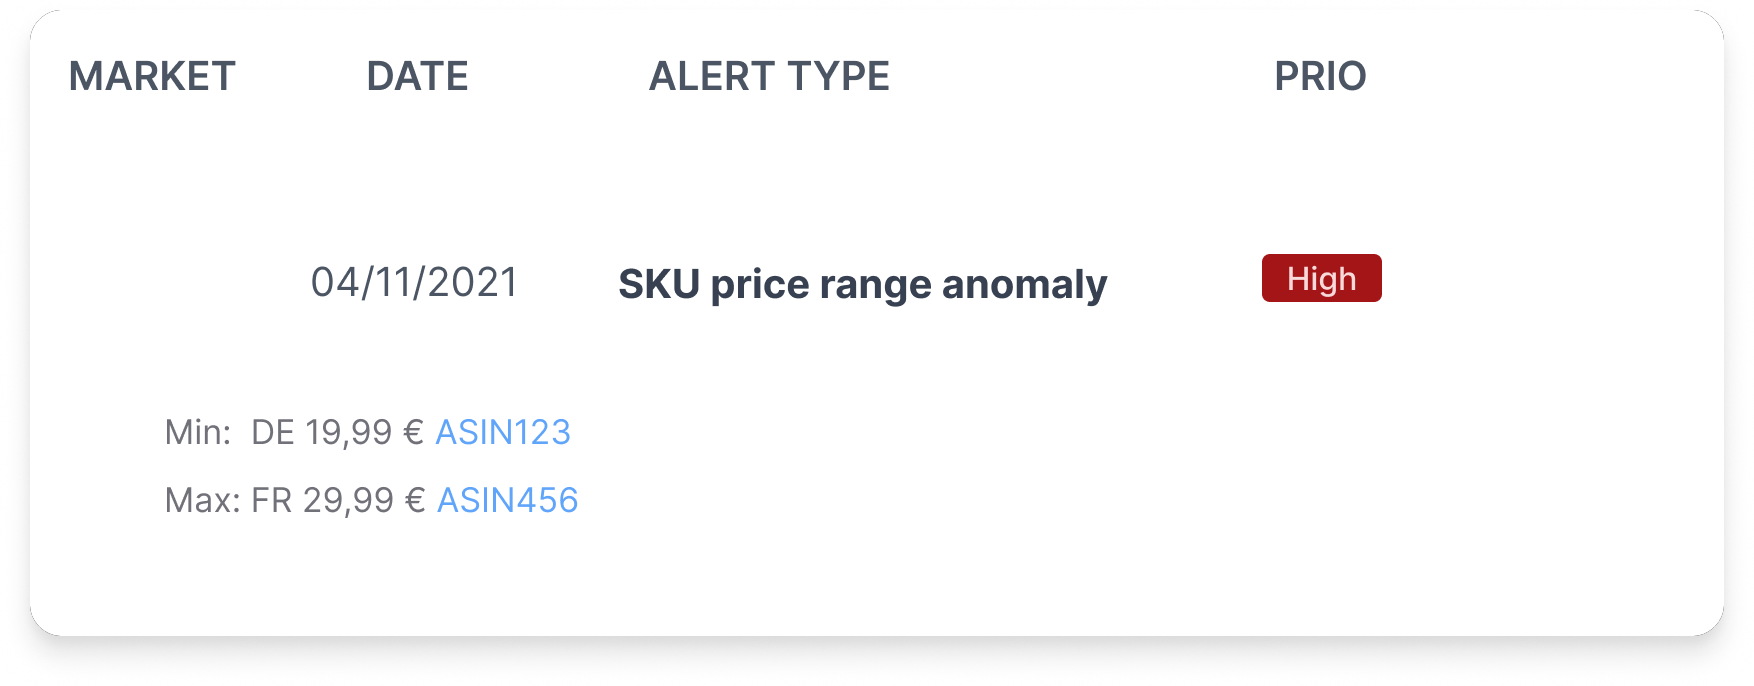 Amazon Alert SKU price range anomaly additional information